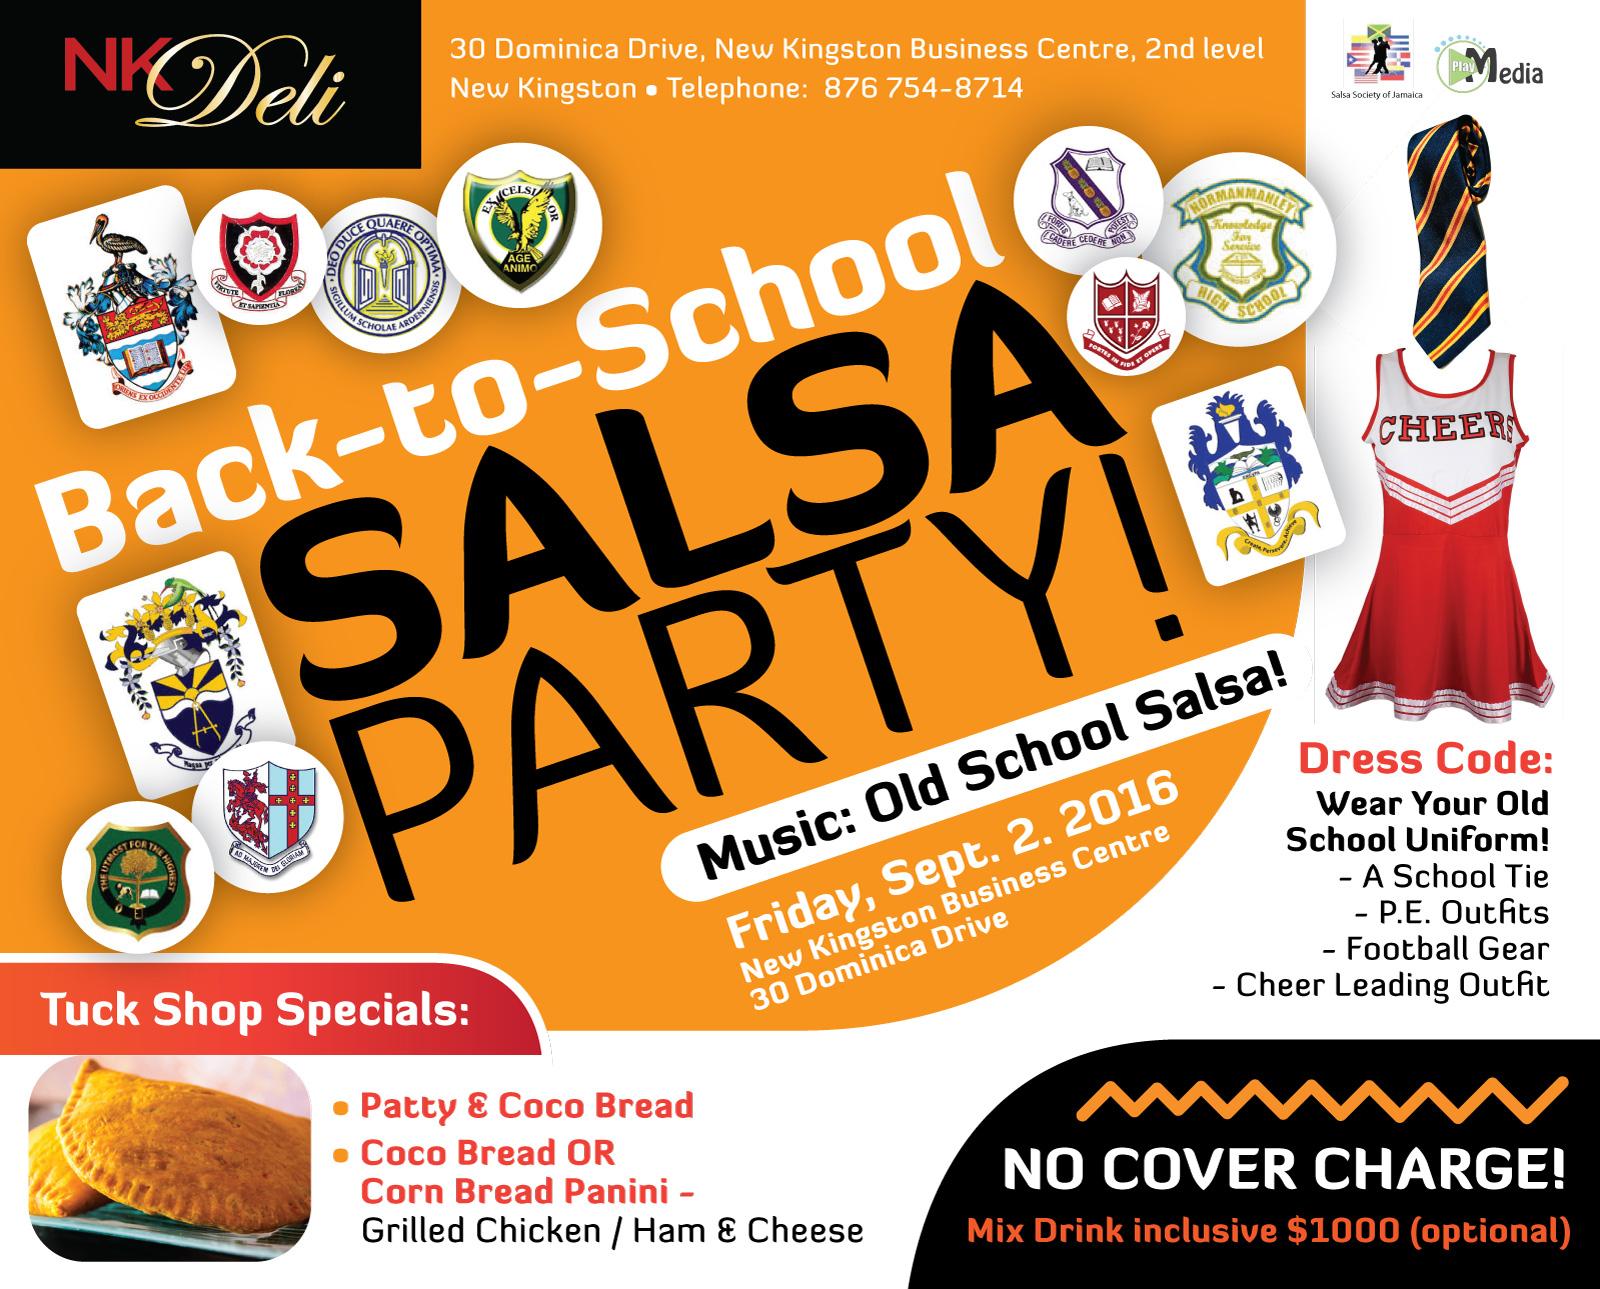 Back To School SALSA PARTY  - Dress Code: Old School Uniform